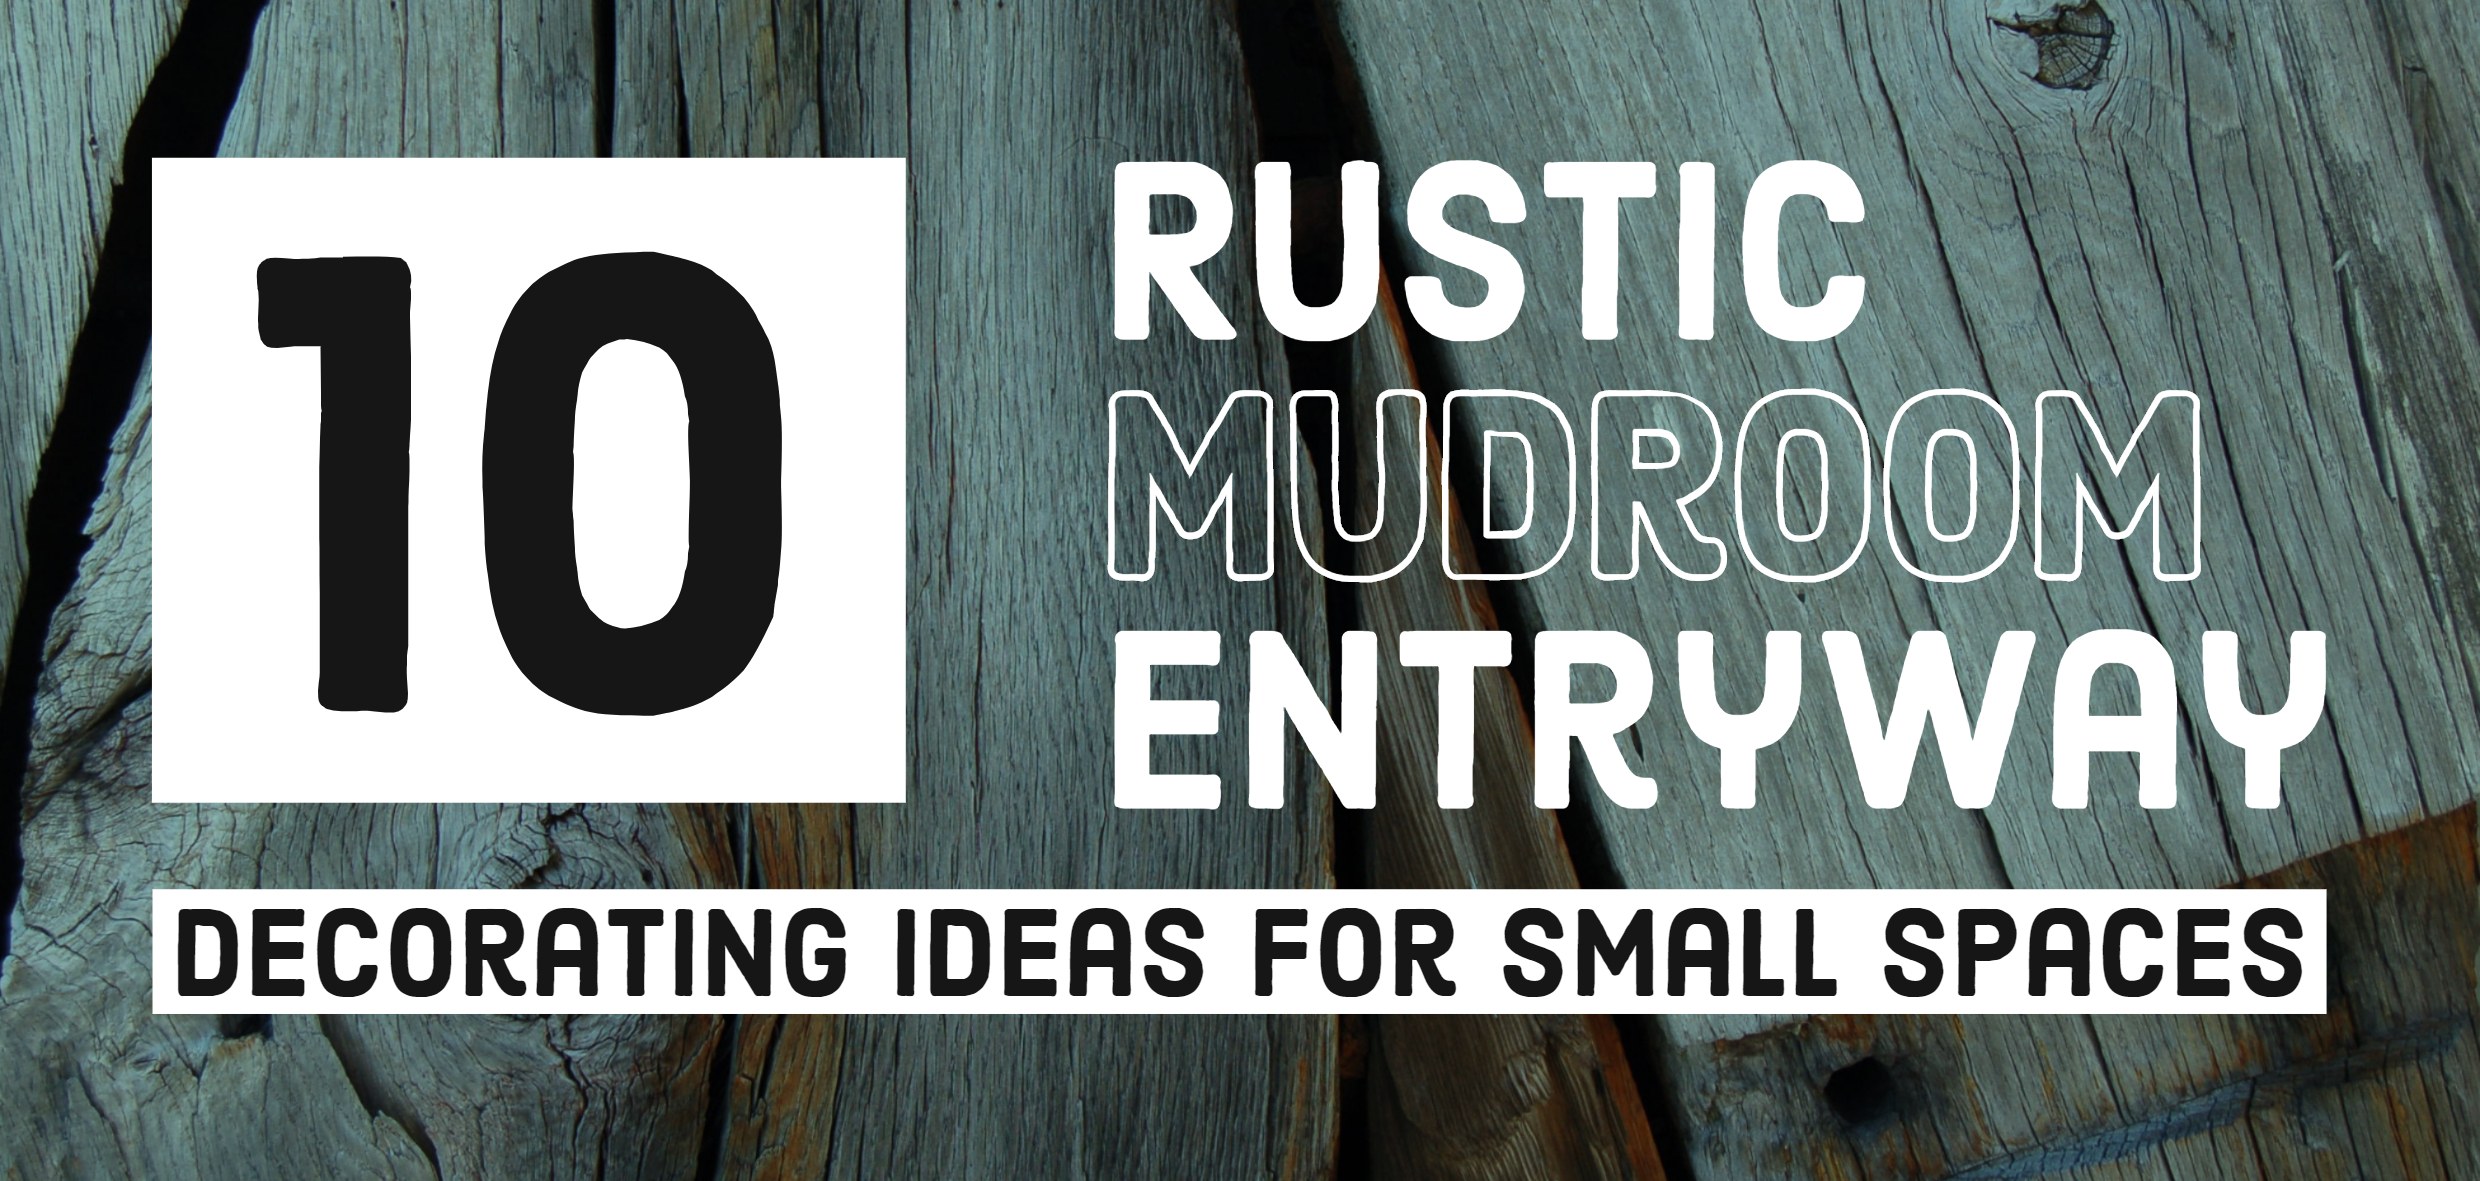 10 Rustic Mudroom Entryway Decorating Ideas For Small Spaces Header